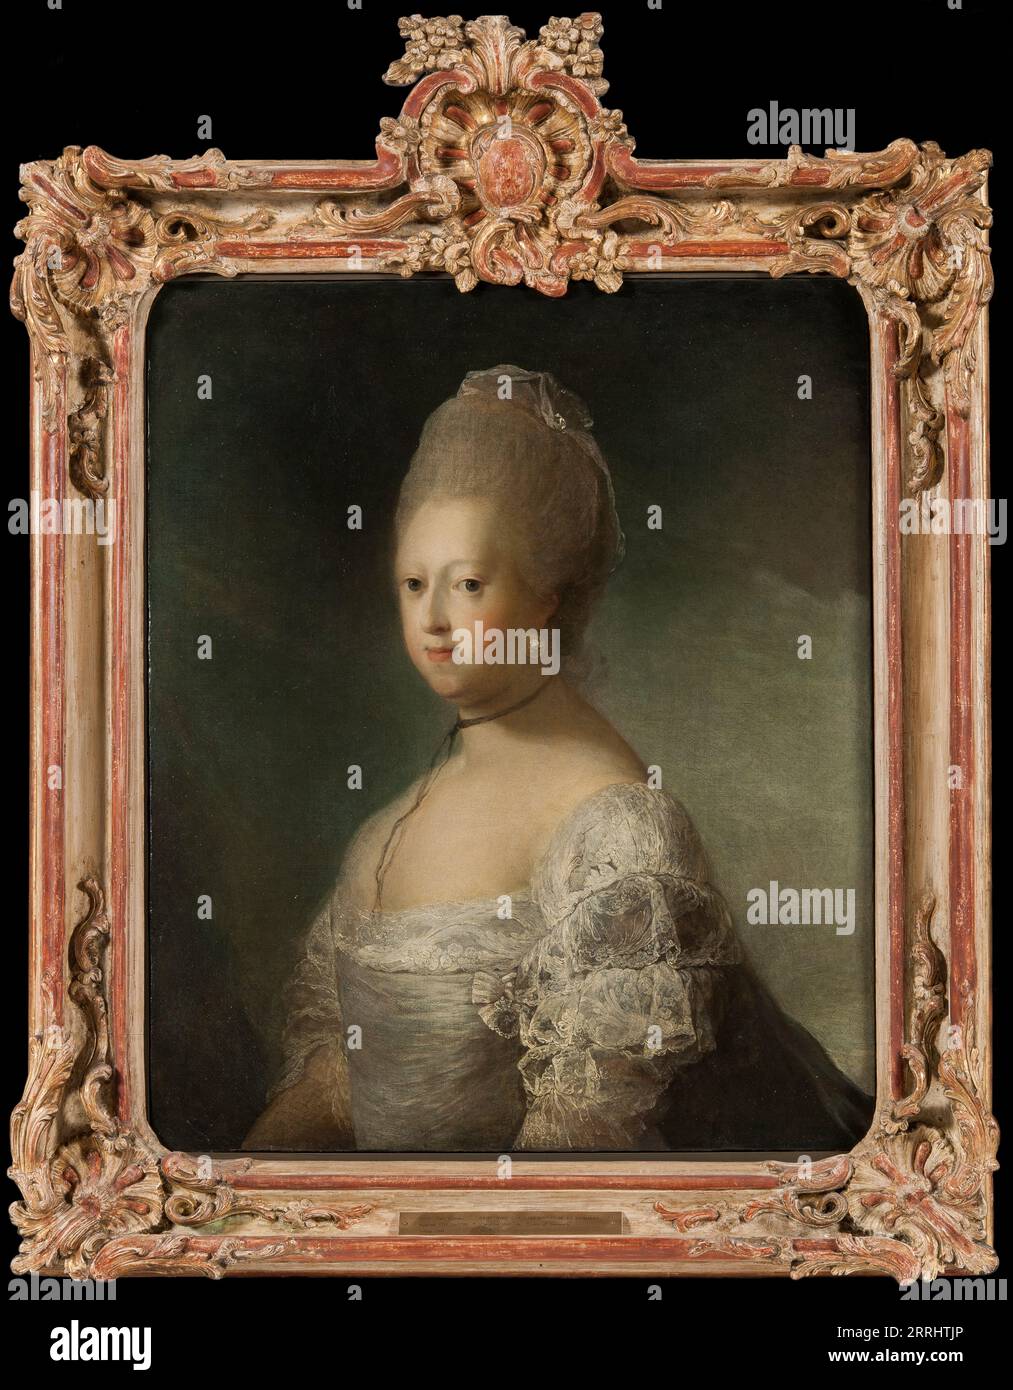 Caroline Mathilde, Queen of Denmark, 18th century Stock Photo - Alamy